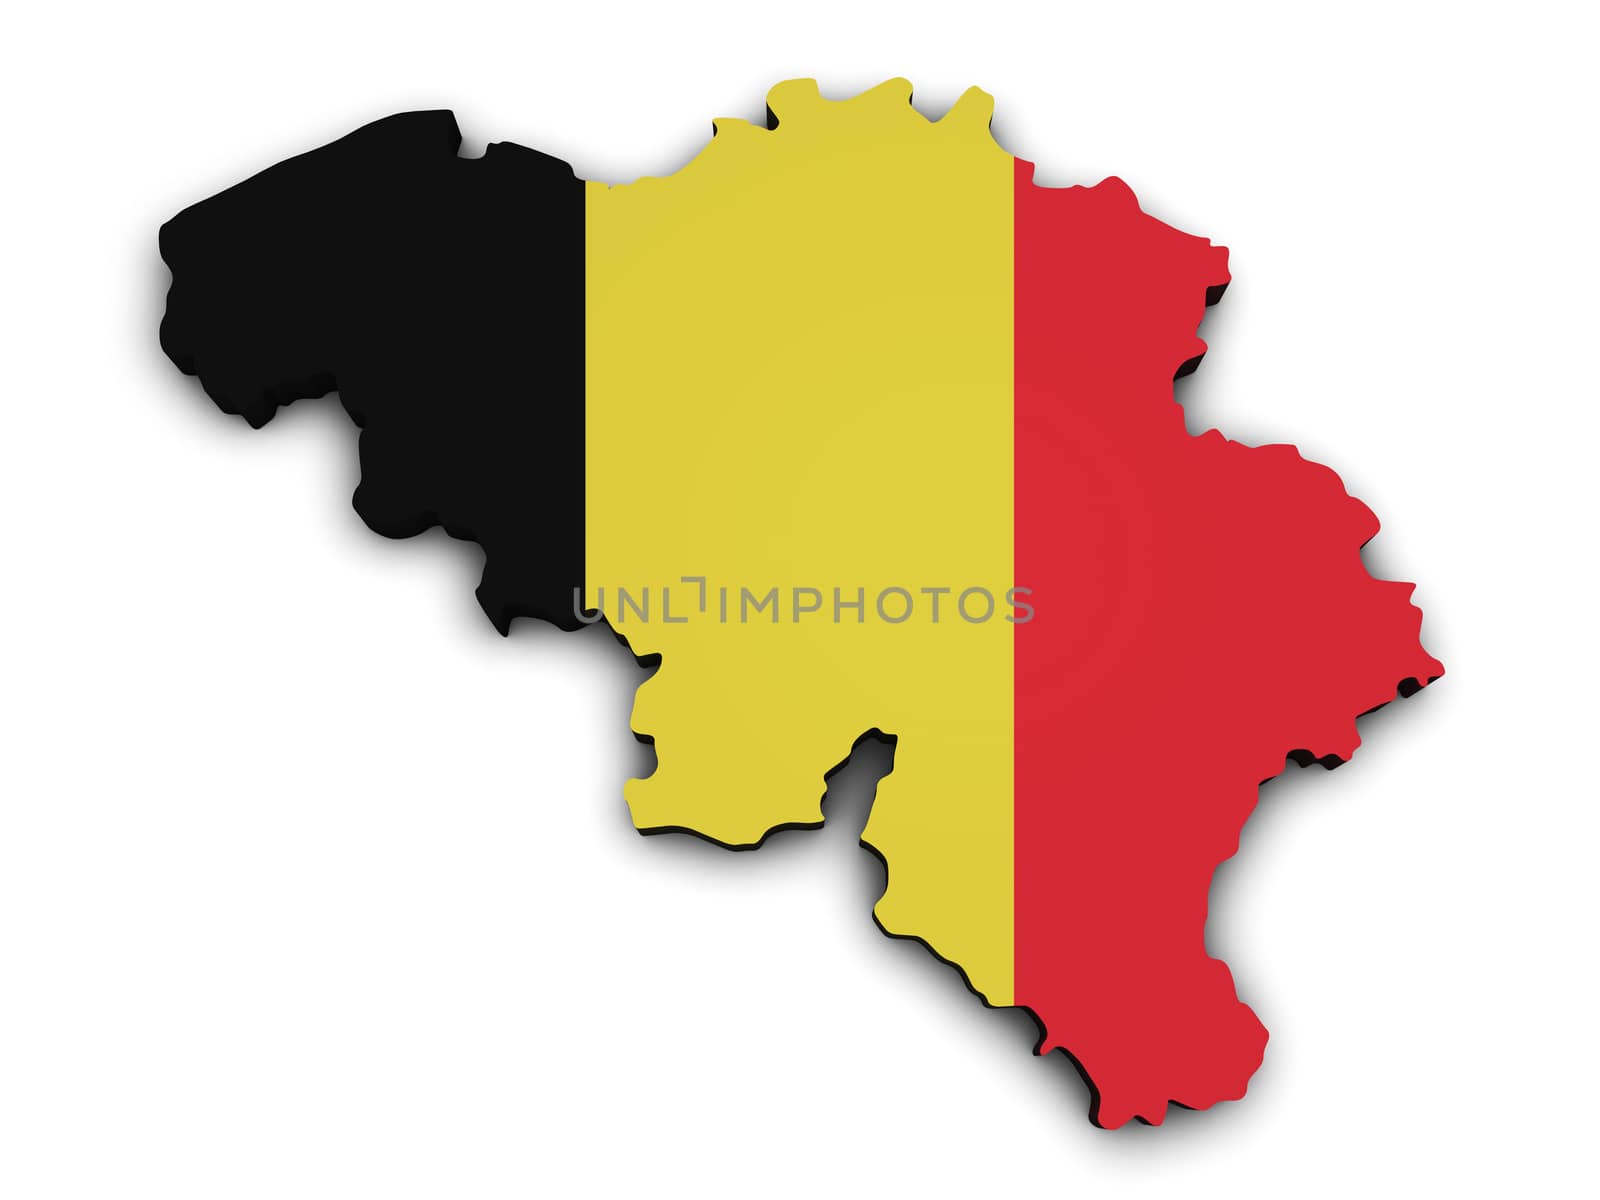 Shape 3d of Belgium map with Belgian flag, illustration isolated on white background.